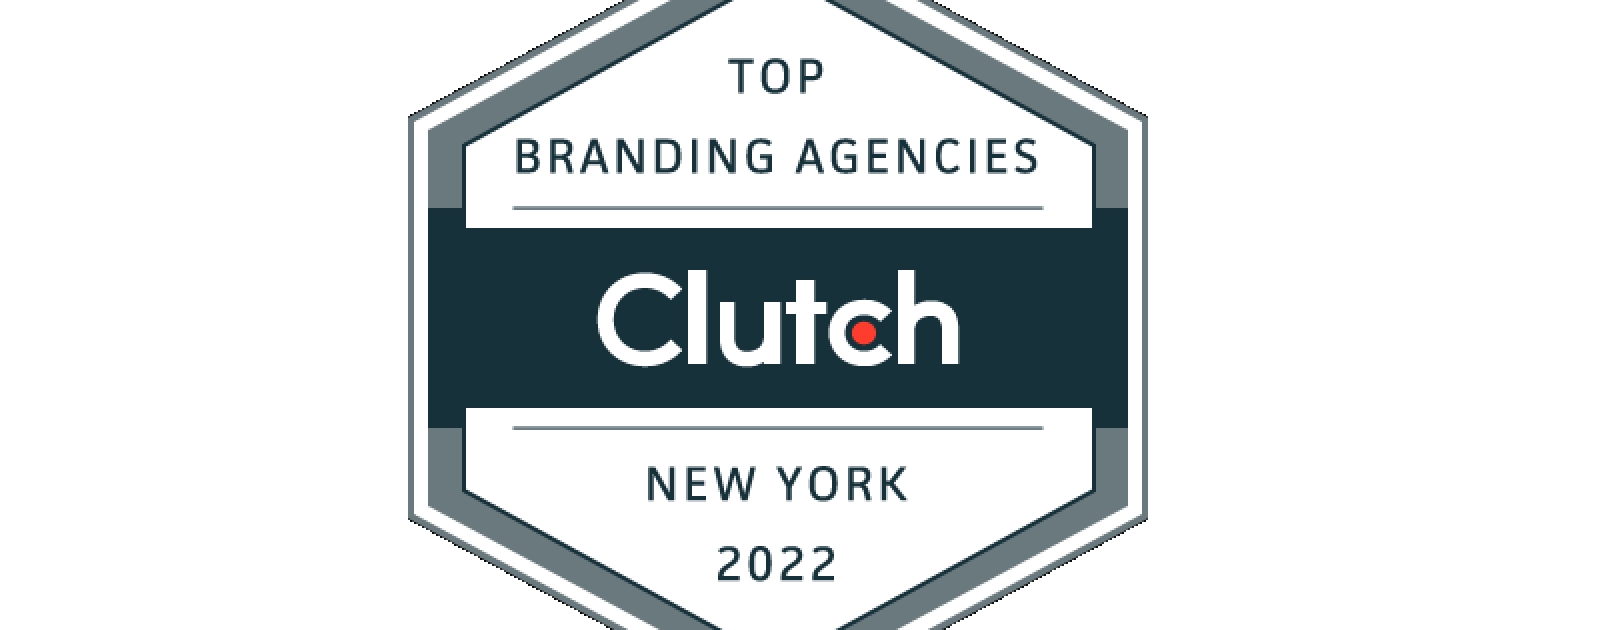 Clutch Recognizes Fishbat as One of Top Branding Agencies 2022